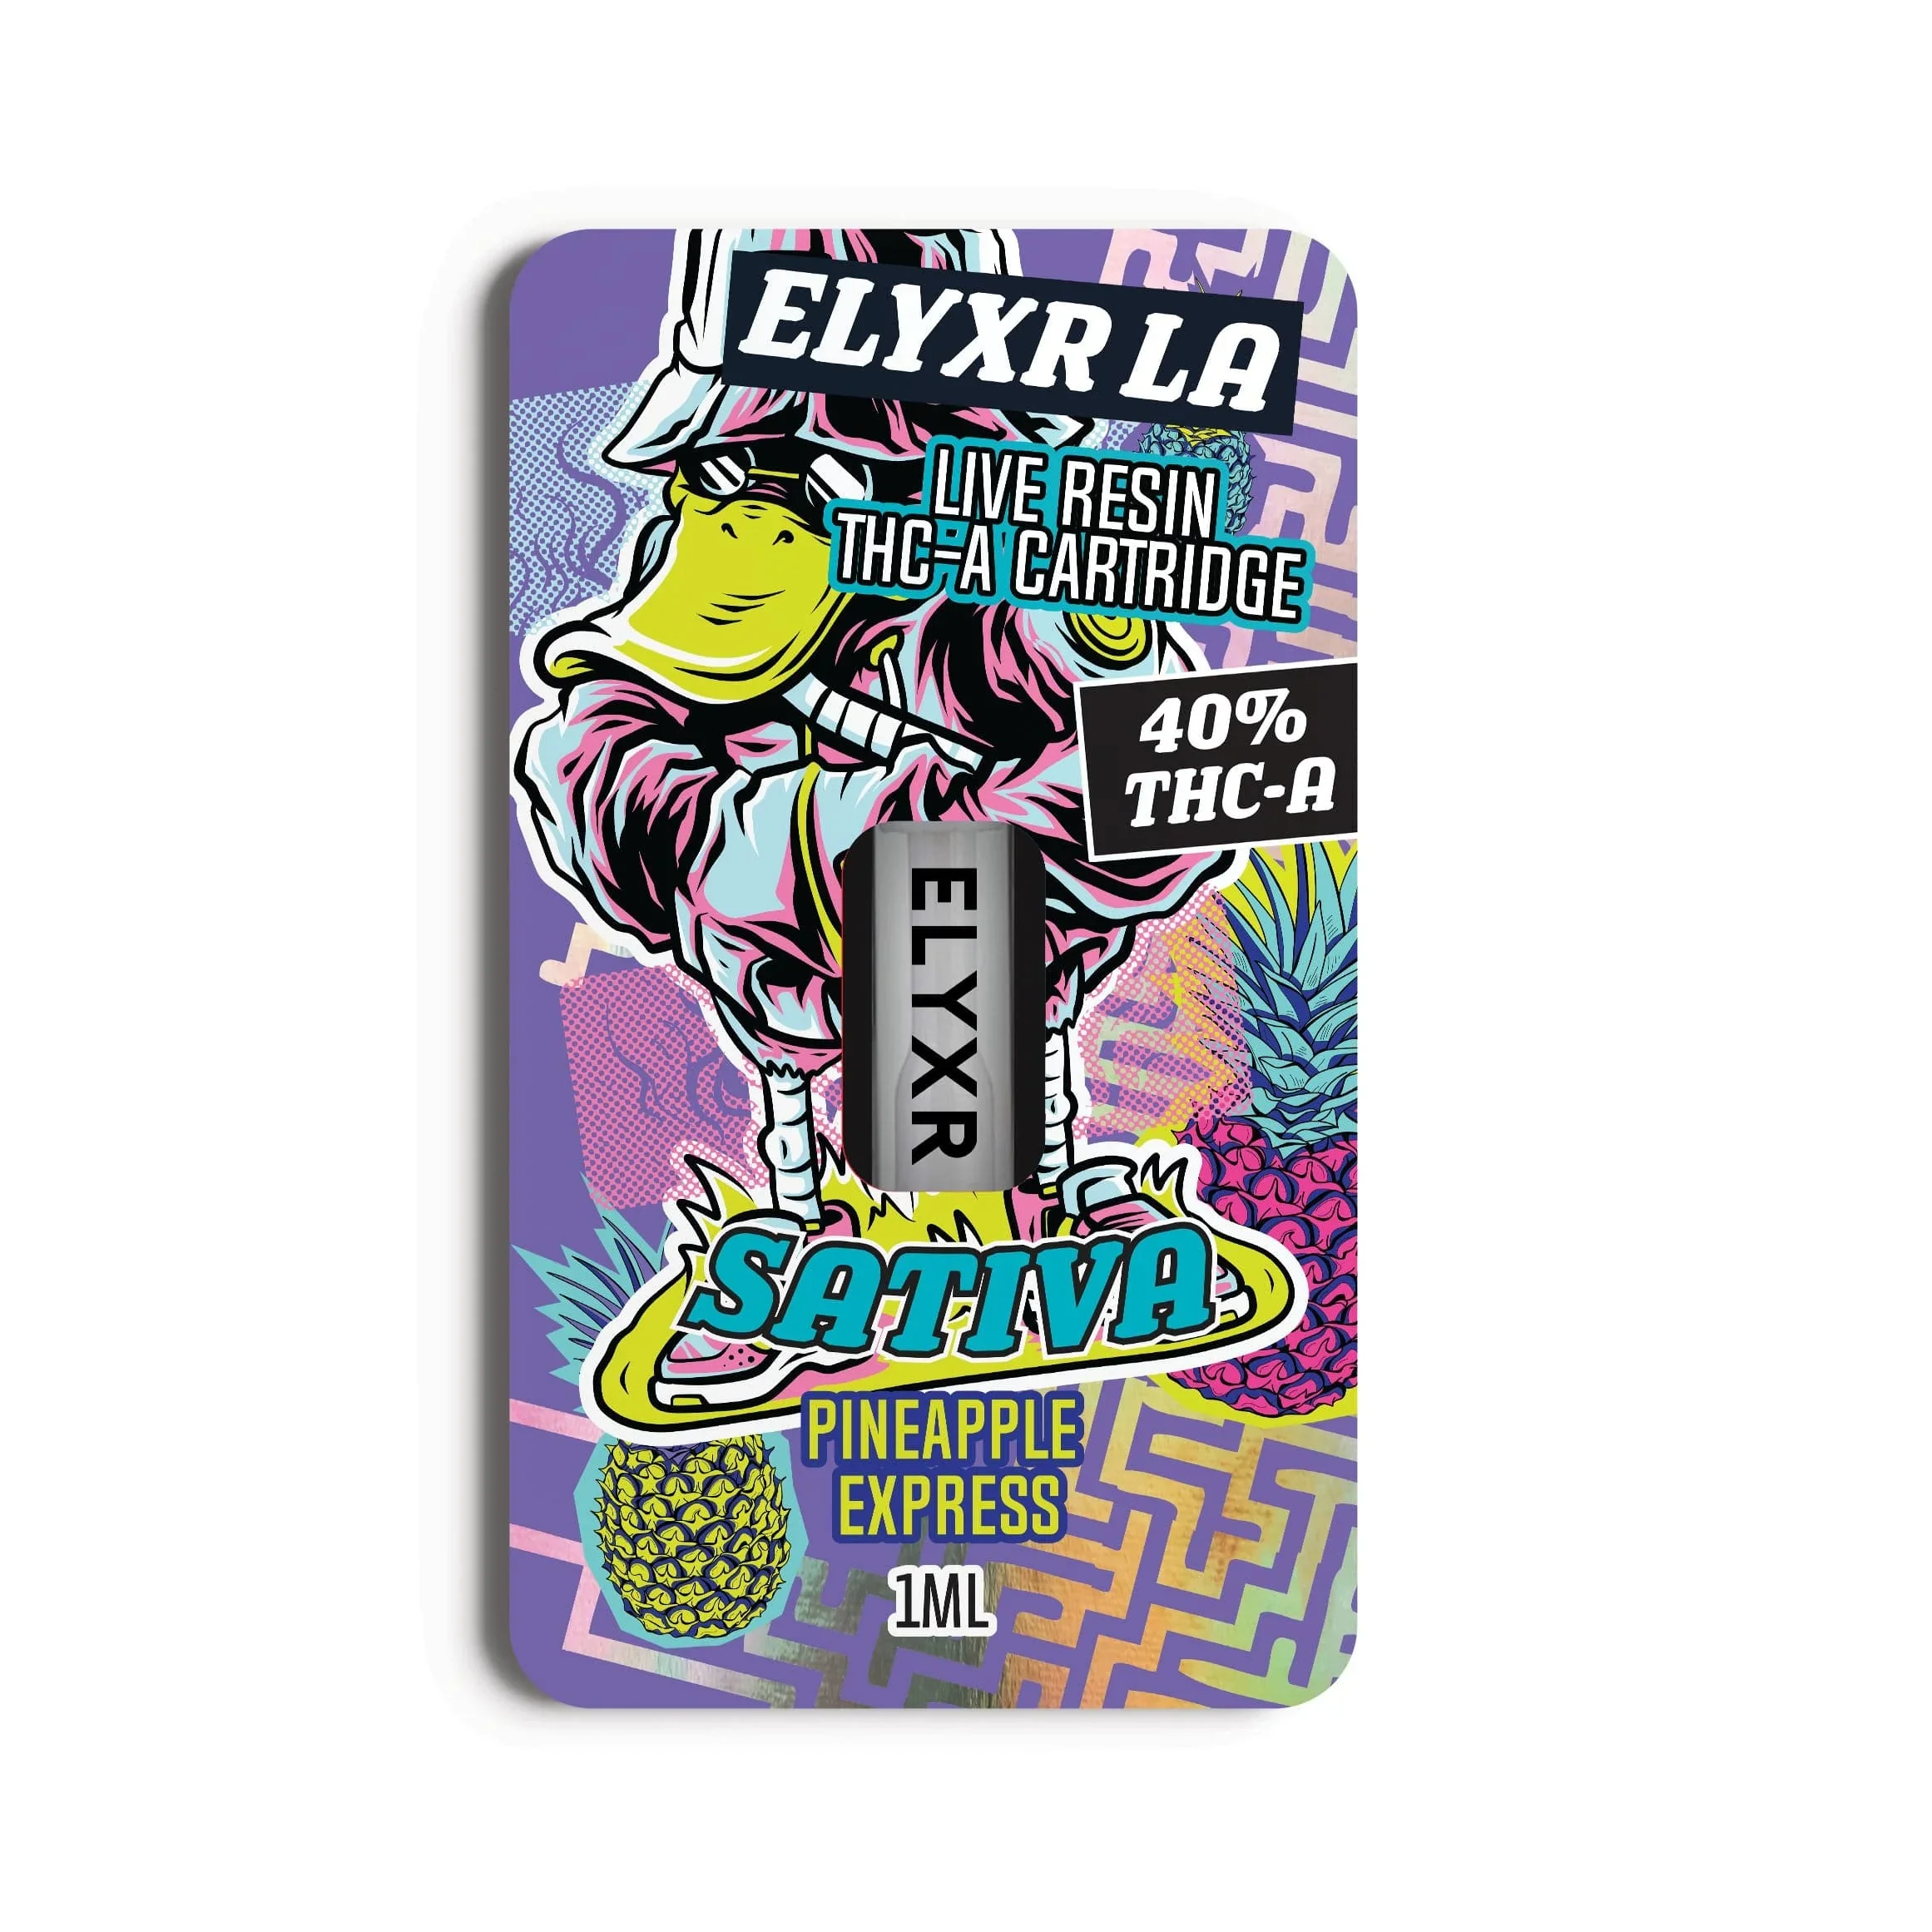 Elyxr LA Live Resin THC A Cartridge 1g Pineapple Express